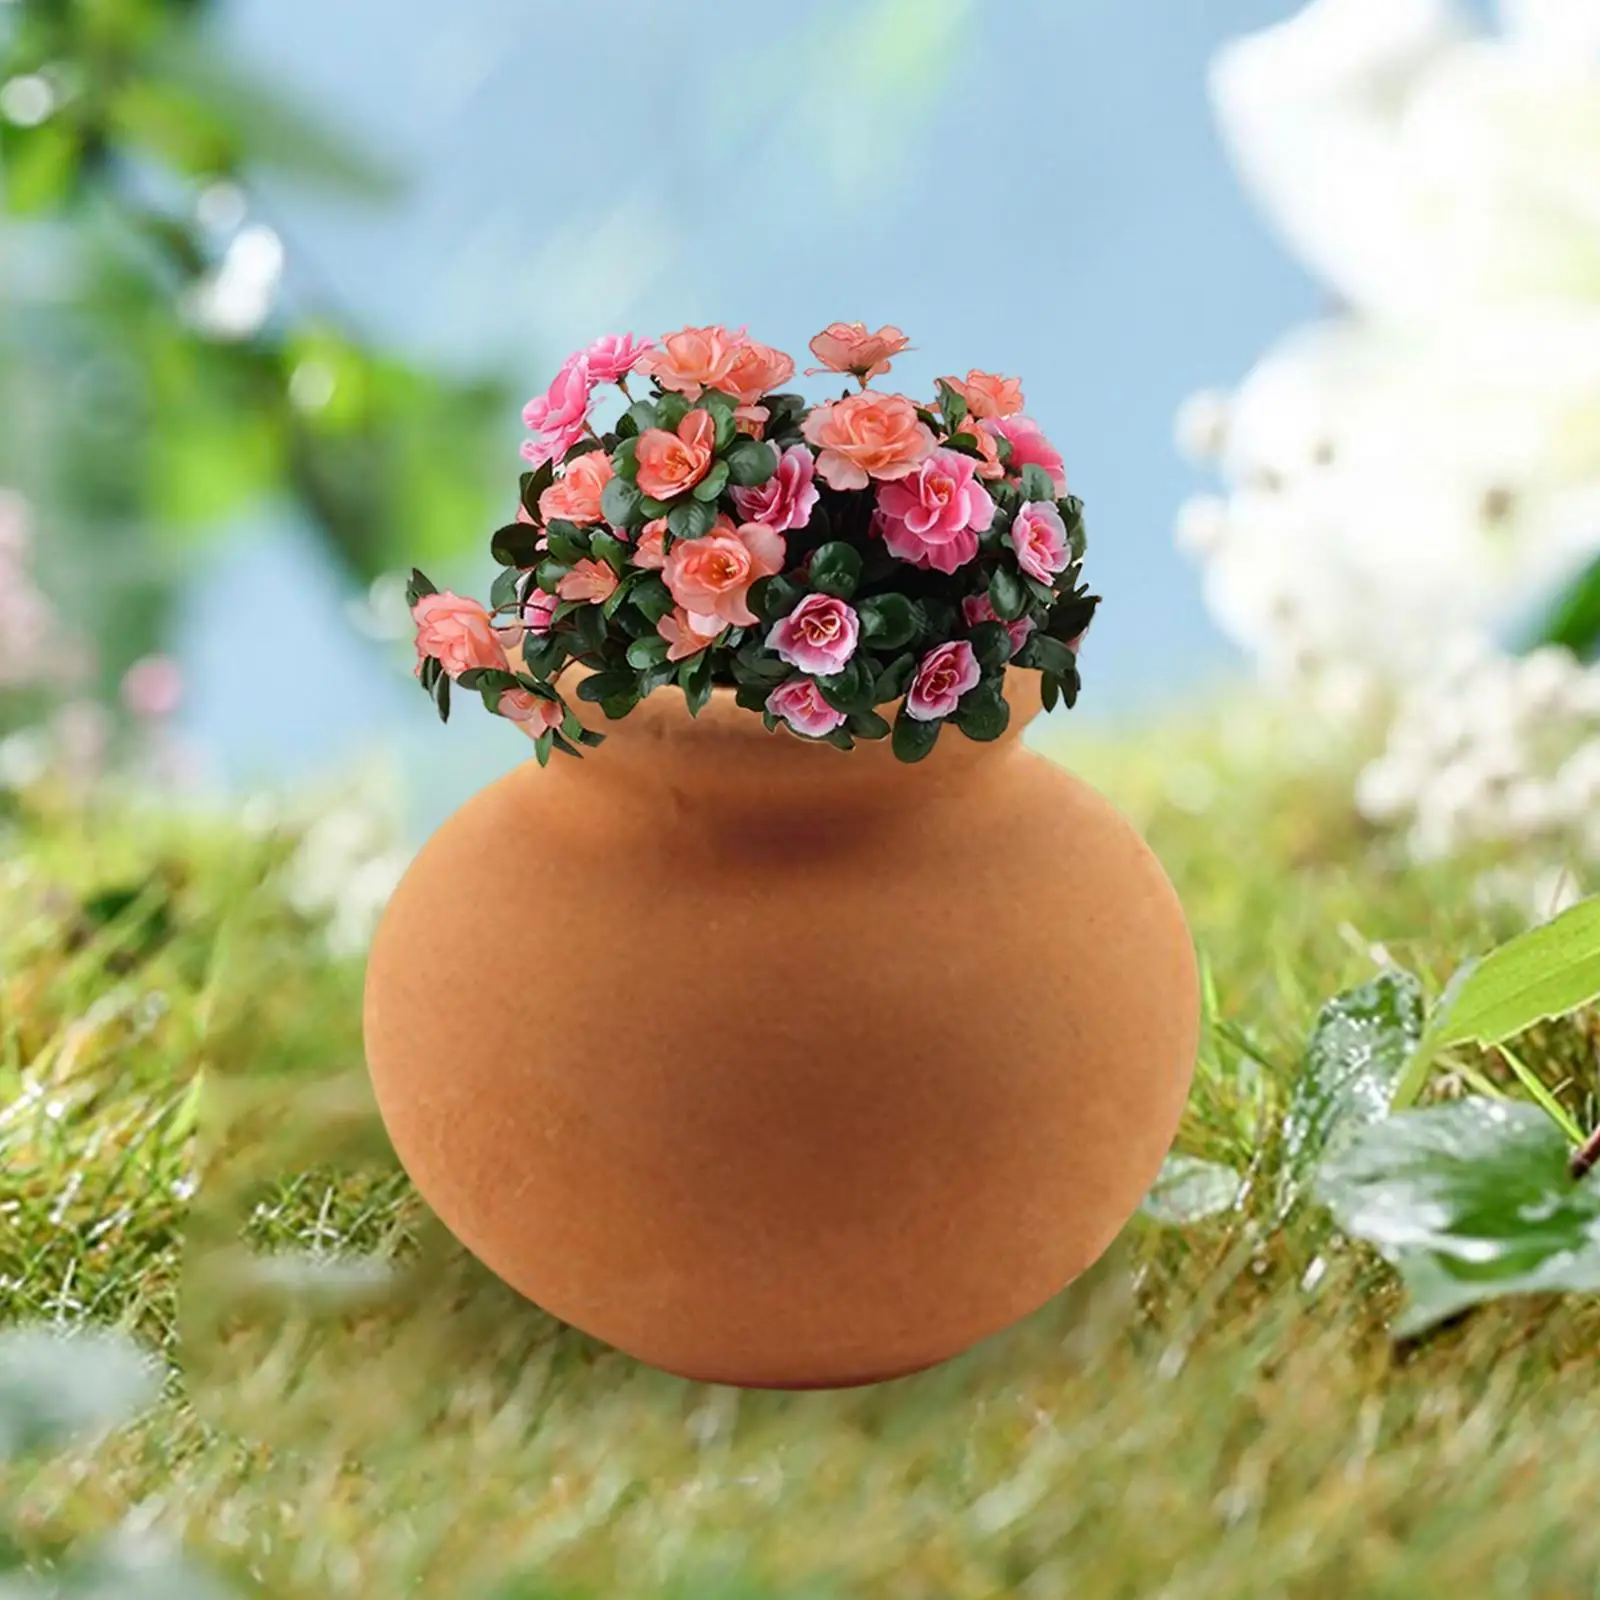 Miniature Tiny Clay Pots Without Plants Office Desktop Small Flower Pot for Bonsai